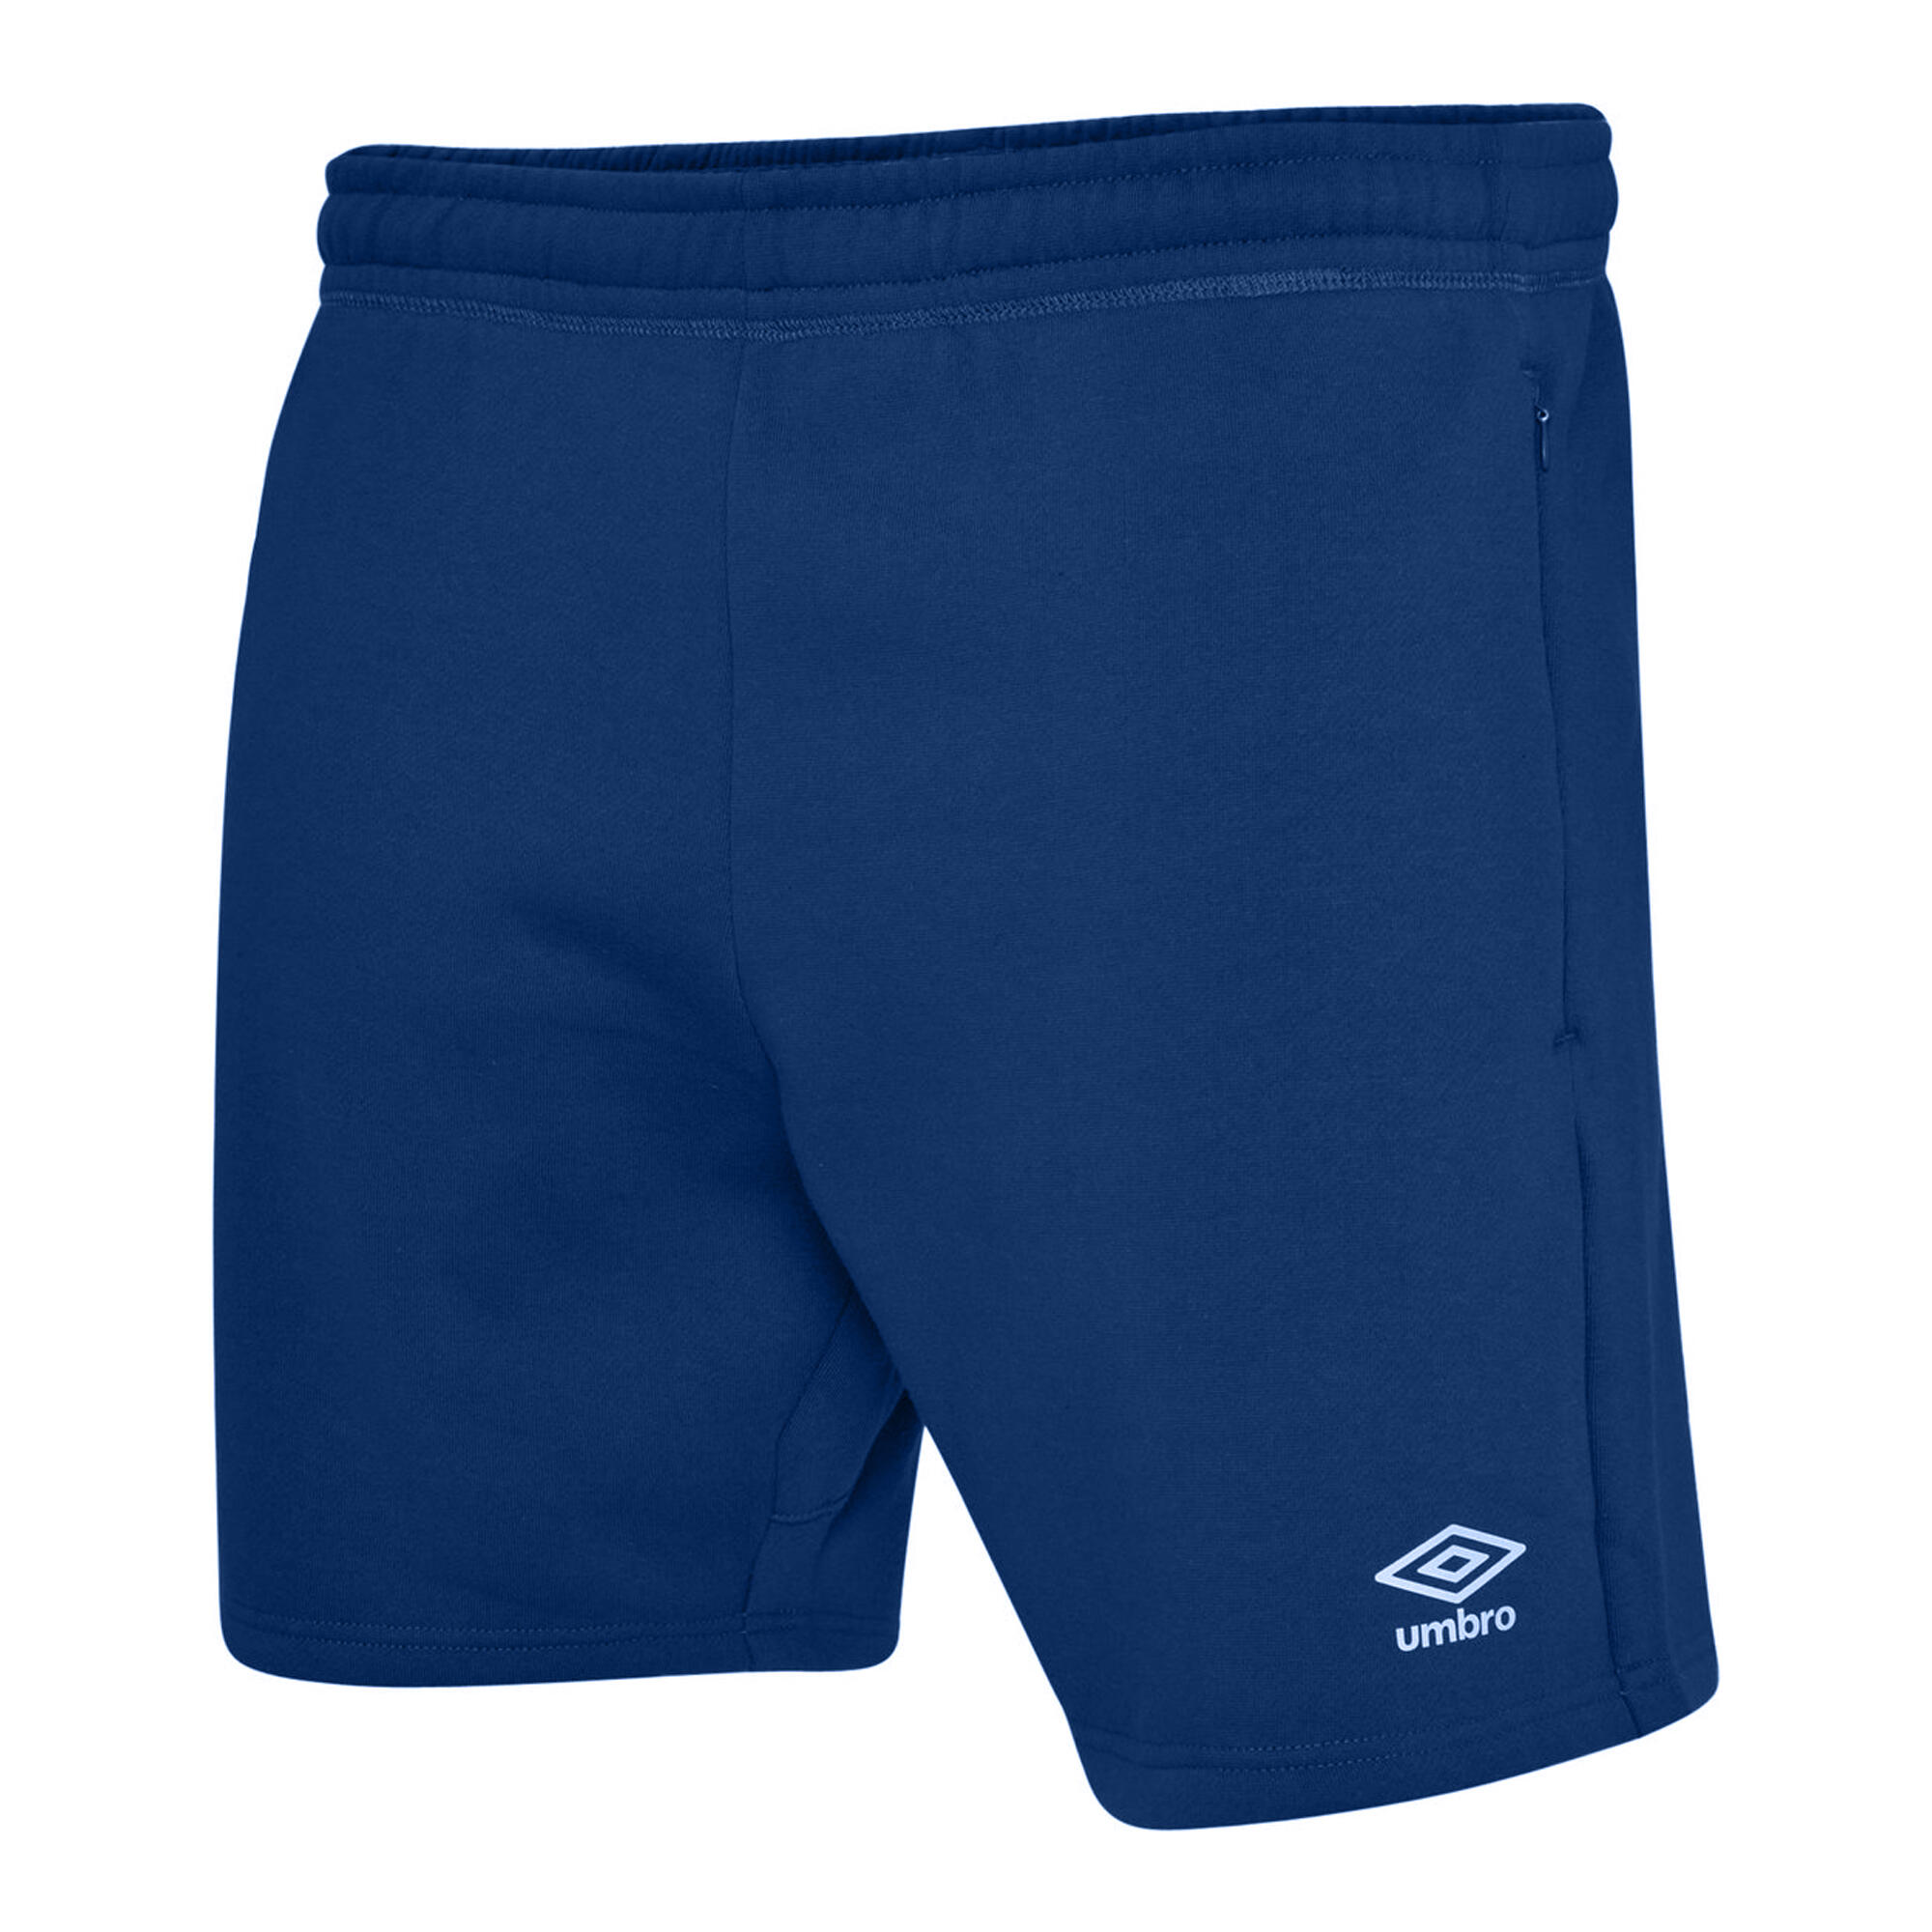 UMBRO Mens Club Leisure Shorts (Navy Blue/White)